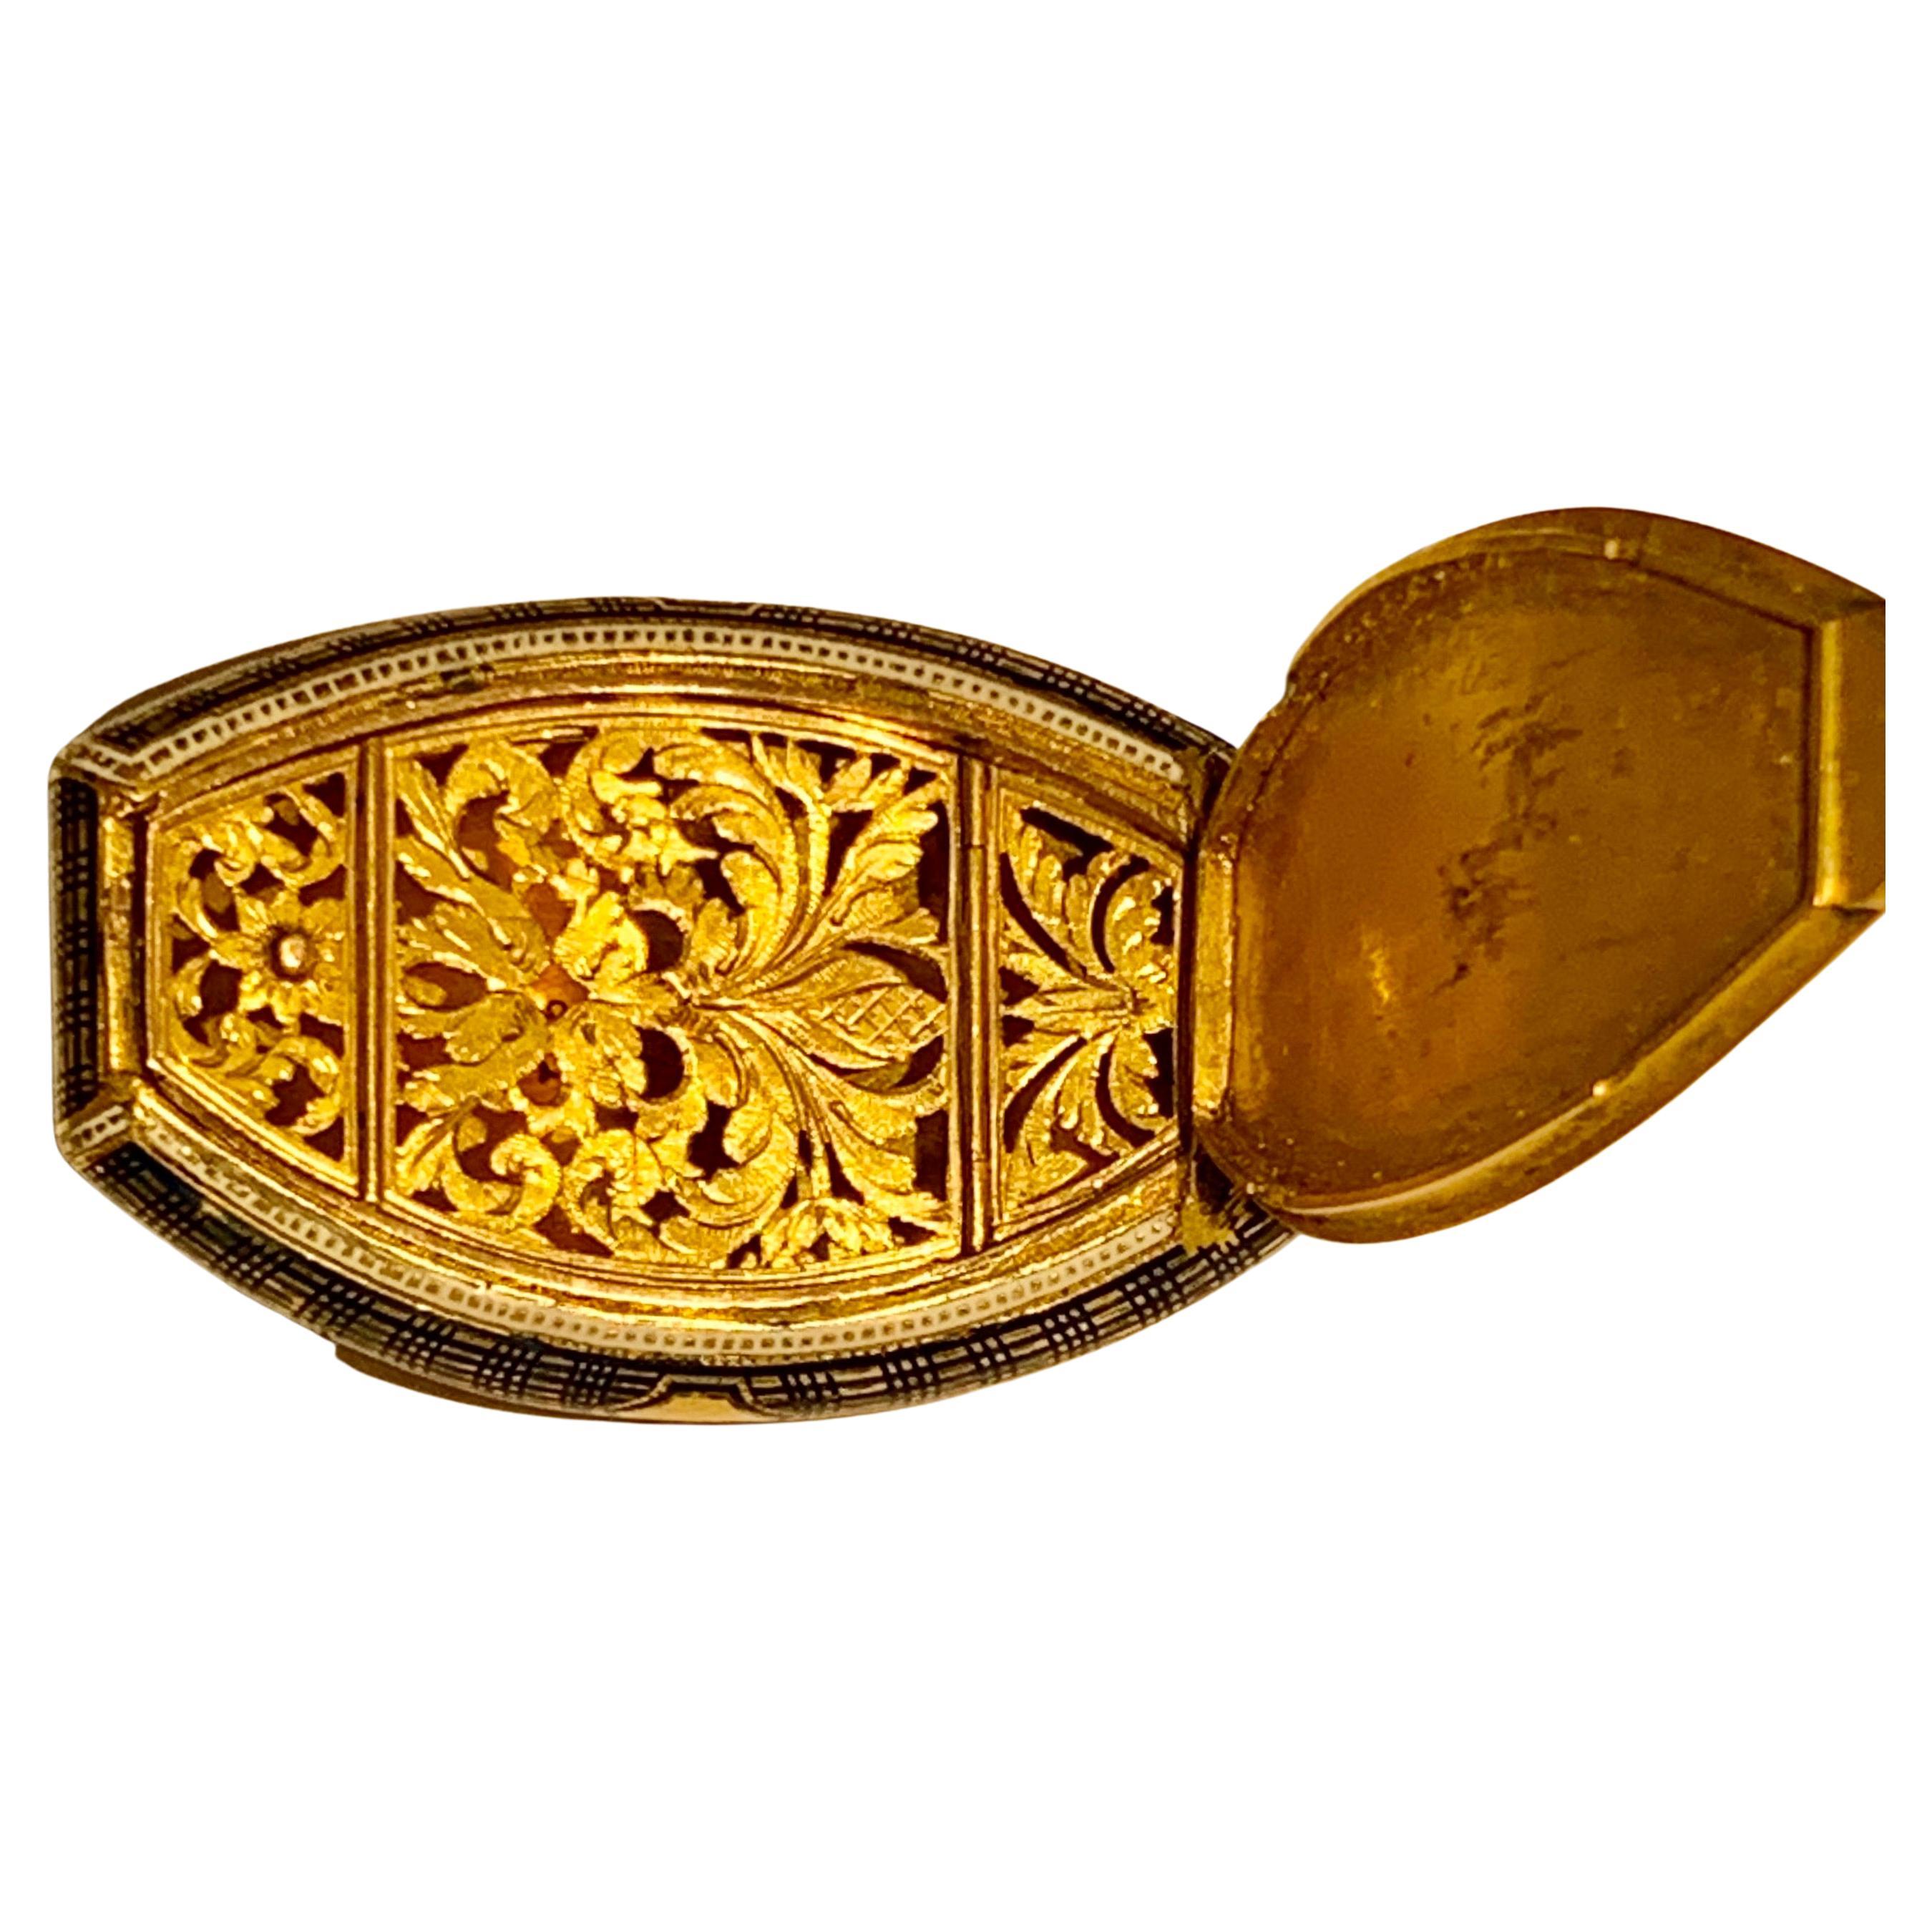 A Rare Antique Swiss Gold & Enamel Jewelled Vinaigrette Box Late 18th C For Sale 11